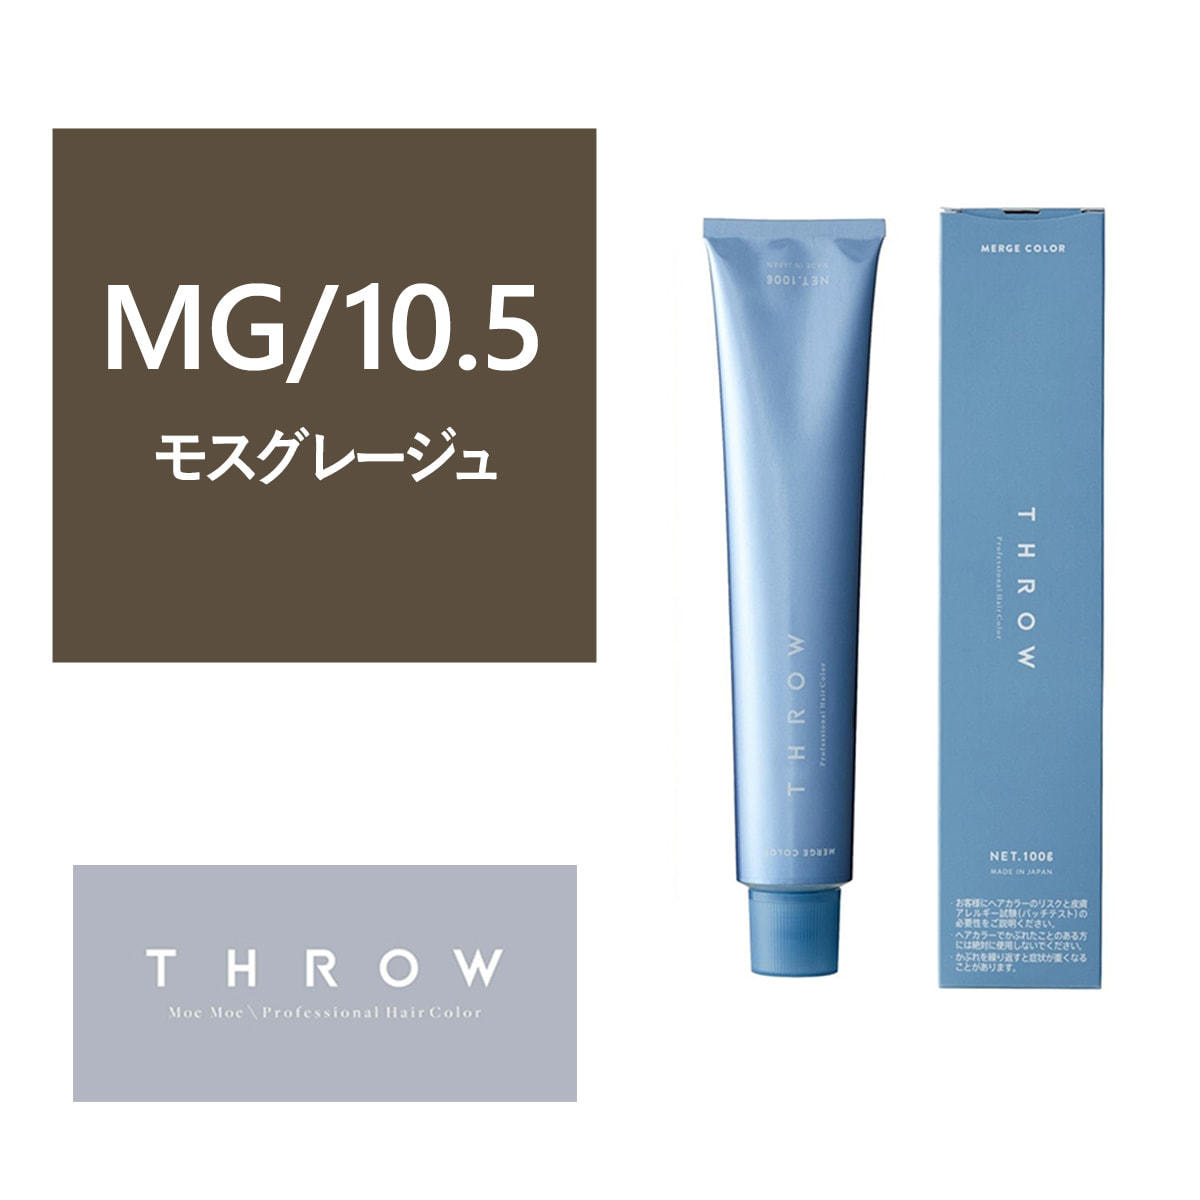 THROW MERGE（スロウ マージ）MG/10.5《グレイファッションカラー》100g【医薬部外品】の卸・通販 | ビューティガレージ